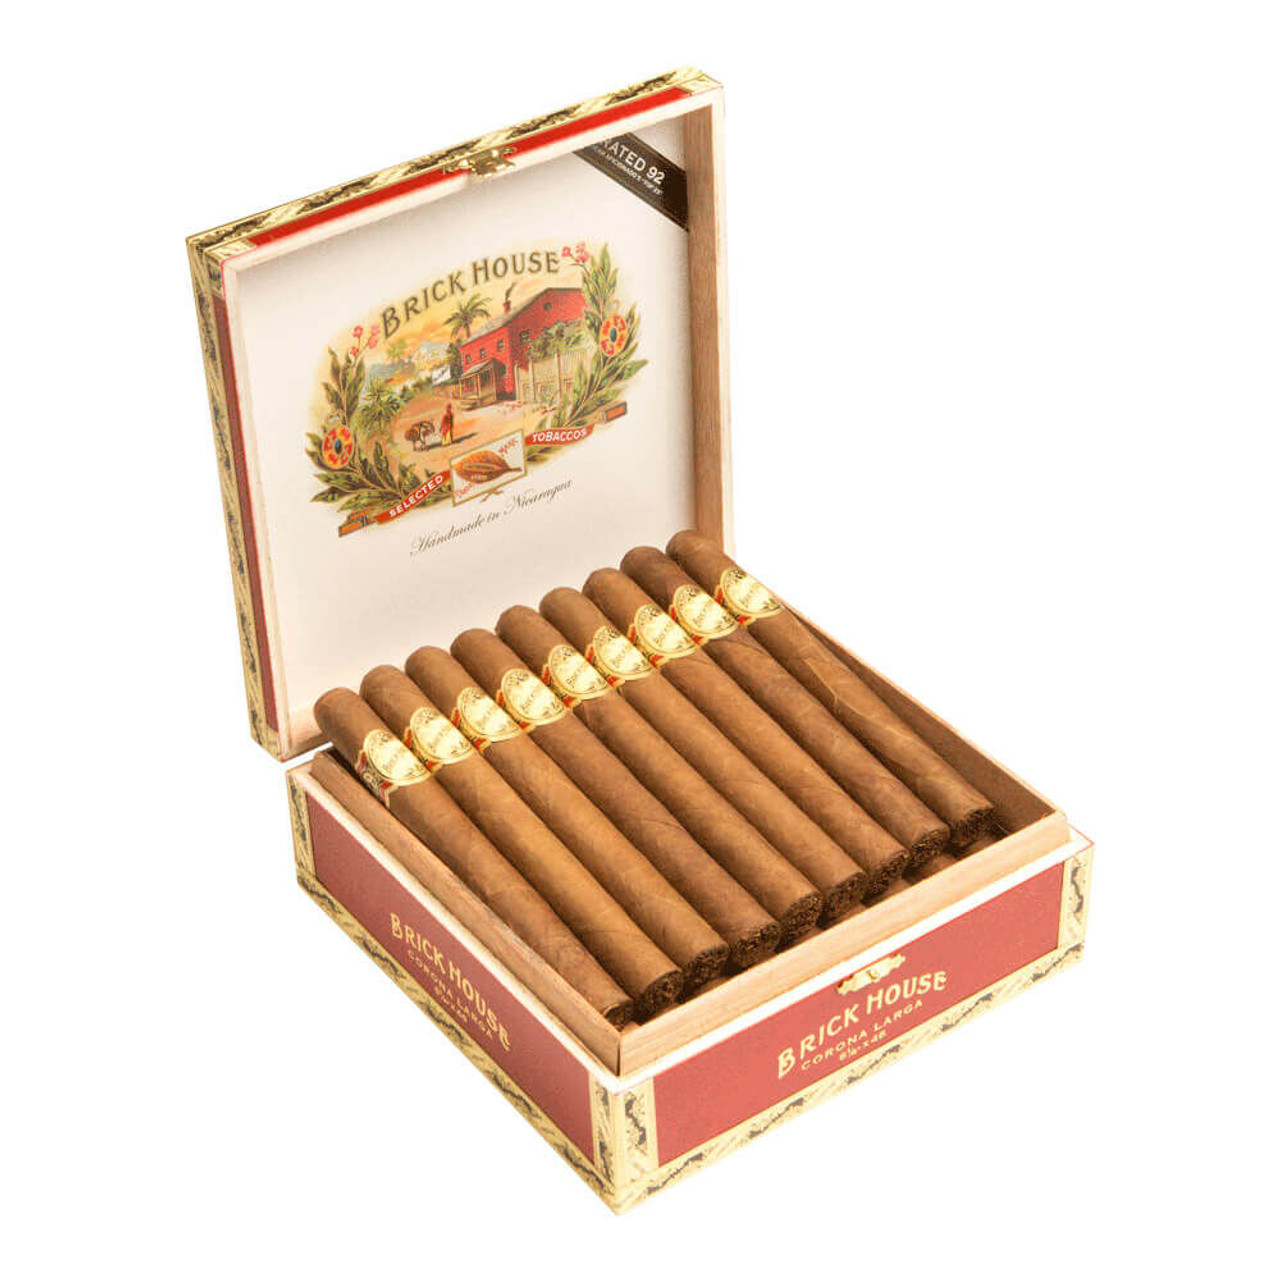 Brick House Robusto Cigars - 5 x 54 (Box of 25) Open